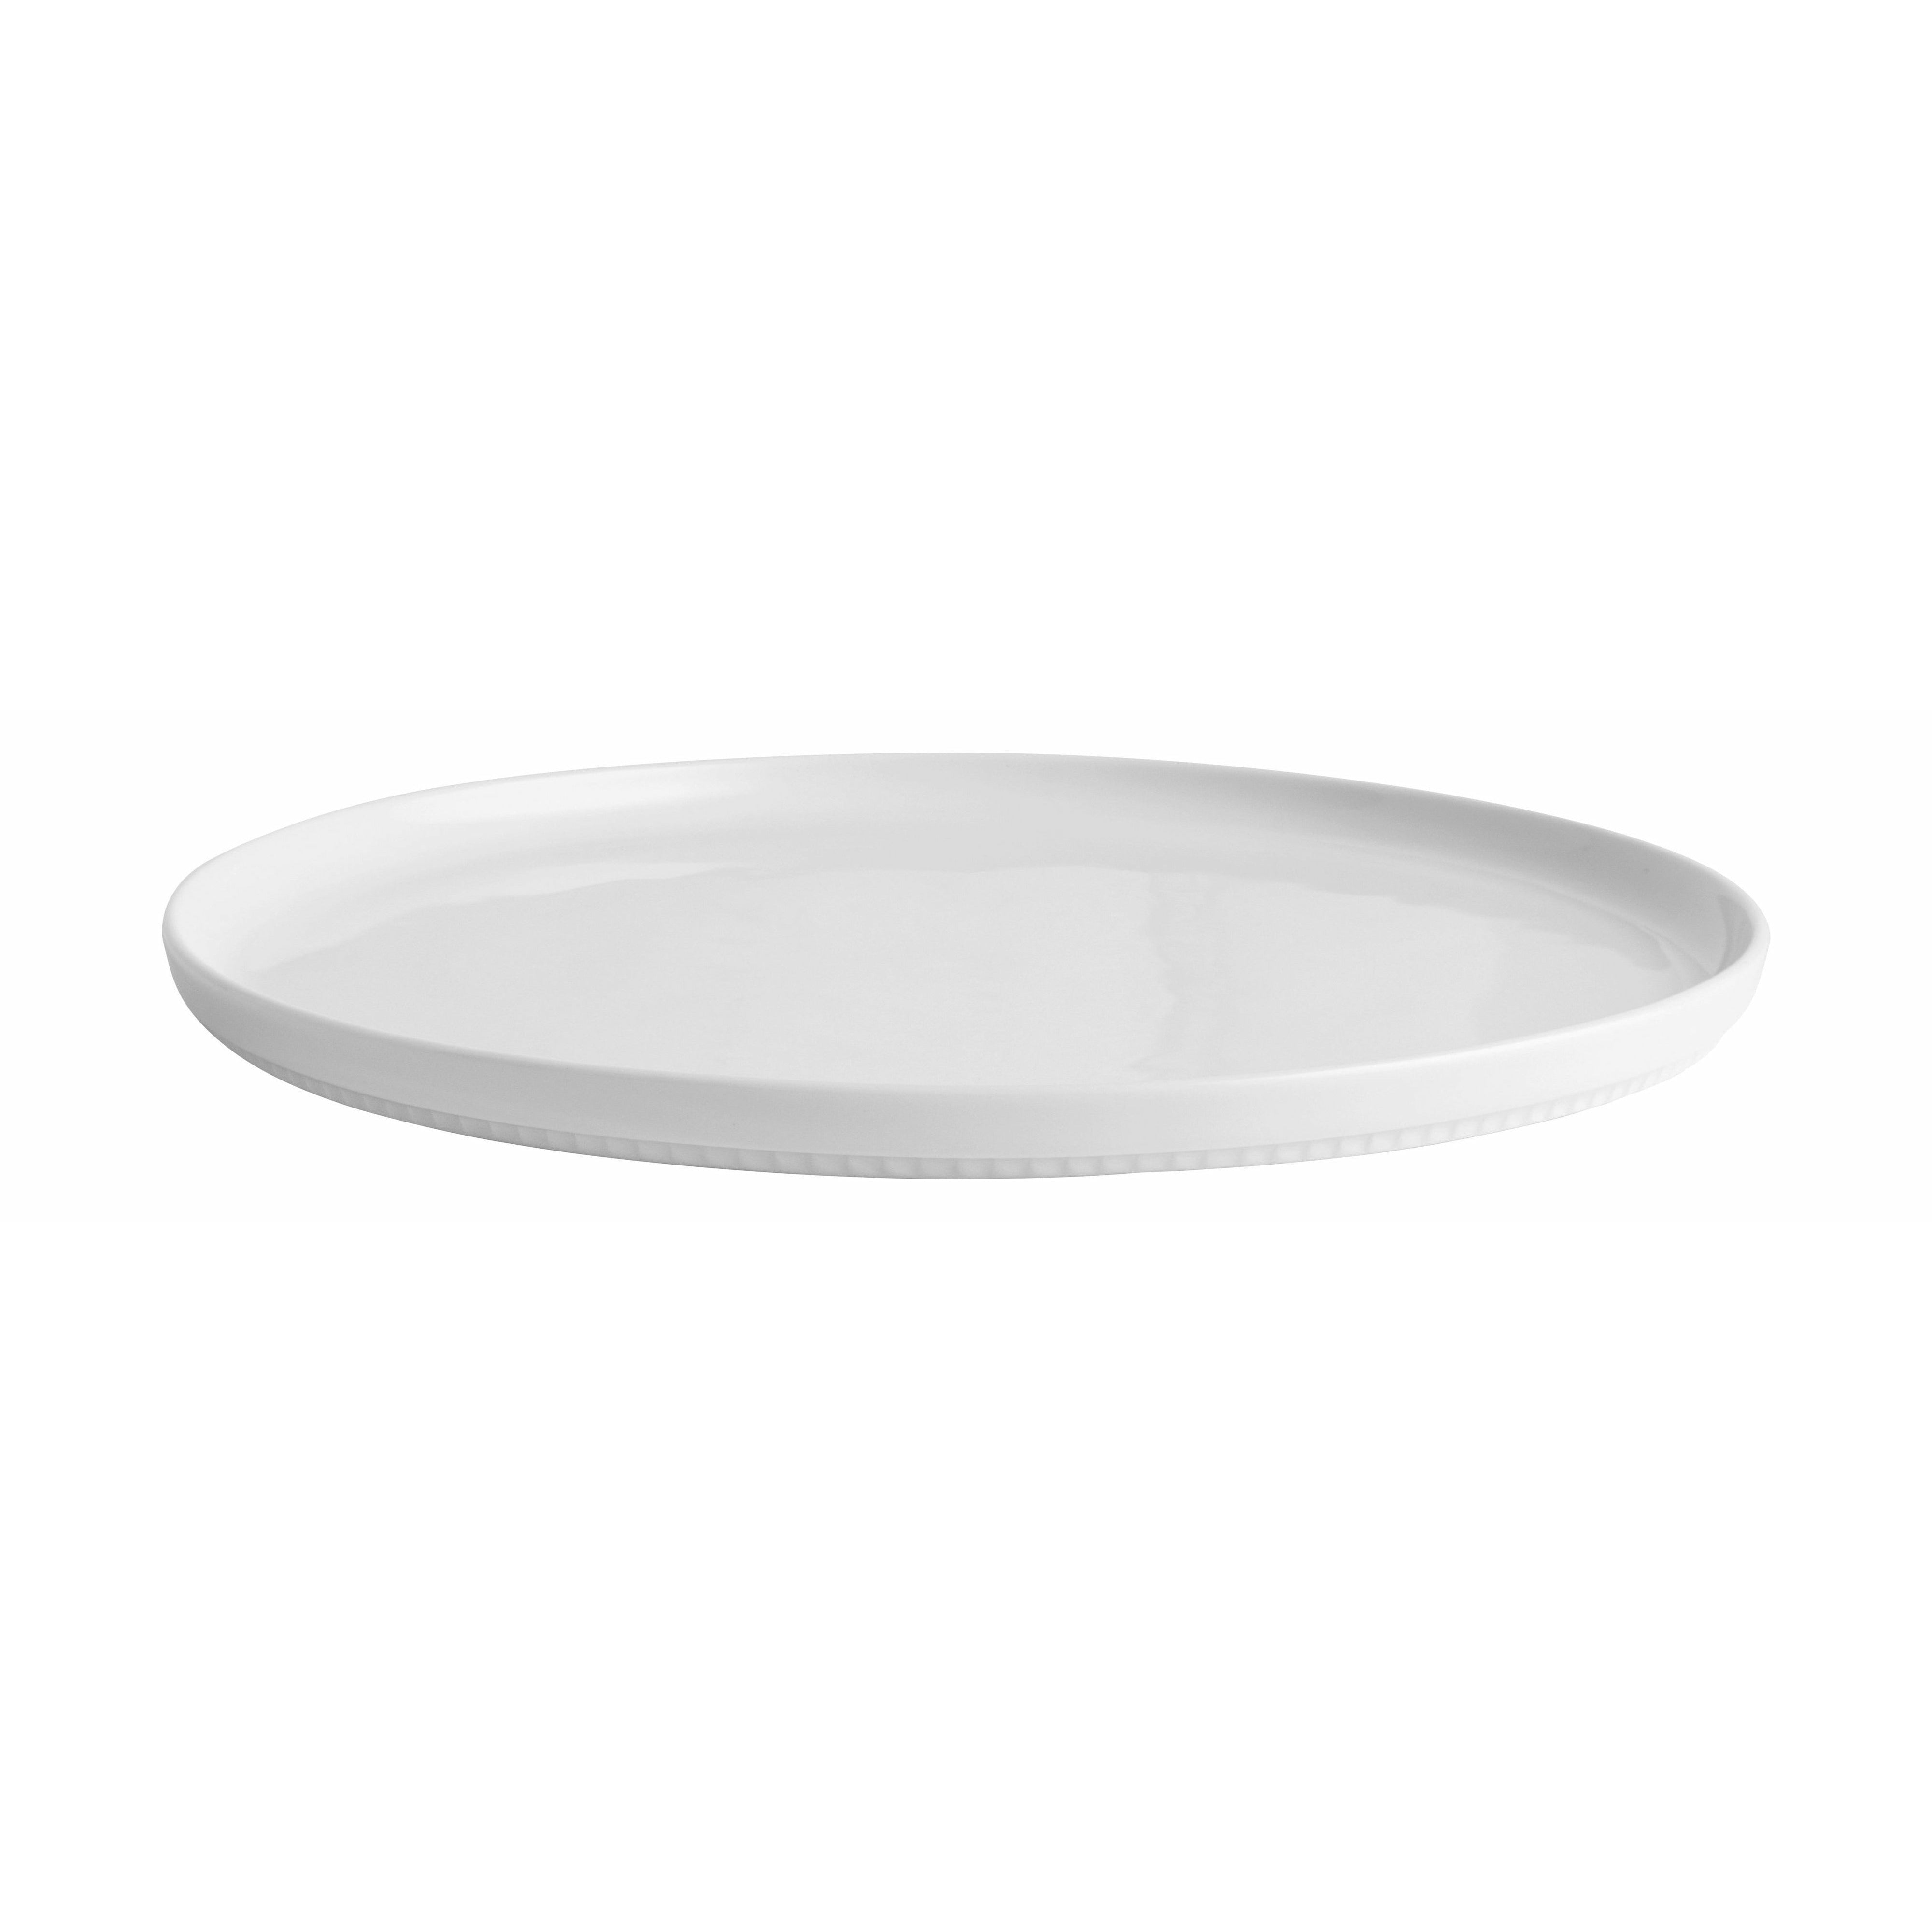 Pillivuyt Toulouse Plate White, 28 cm